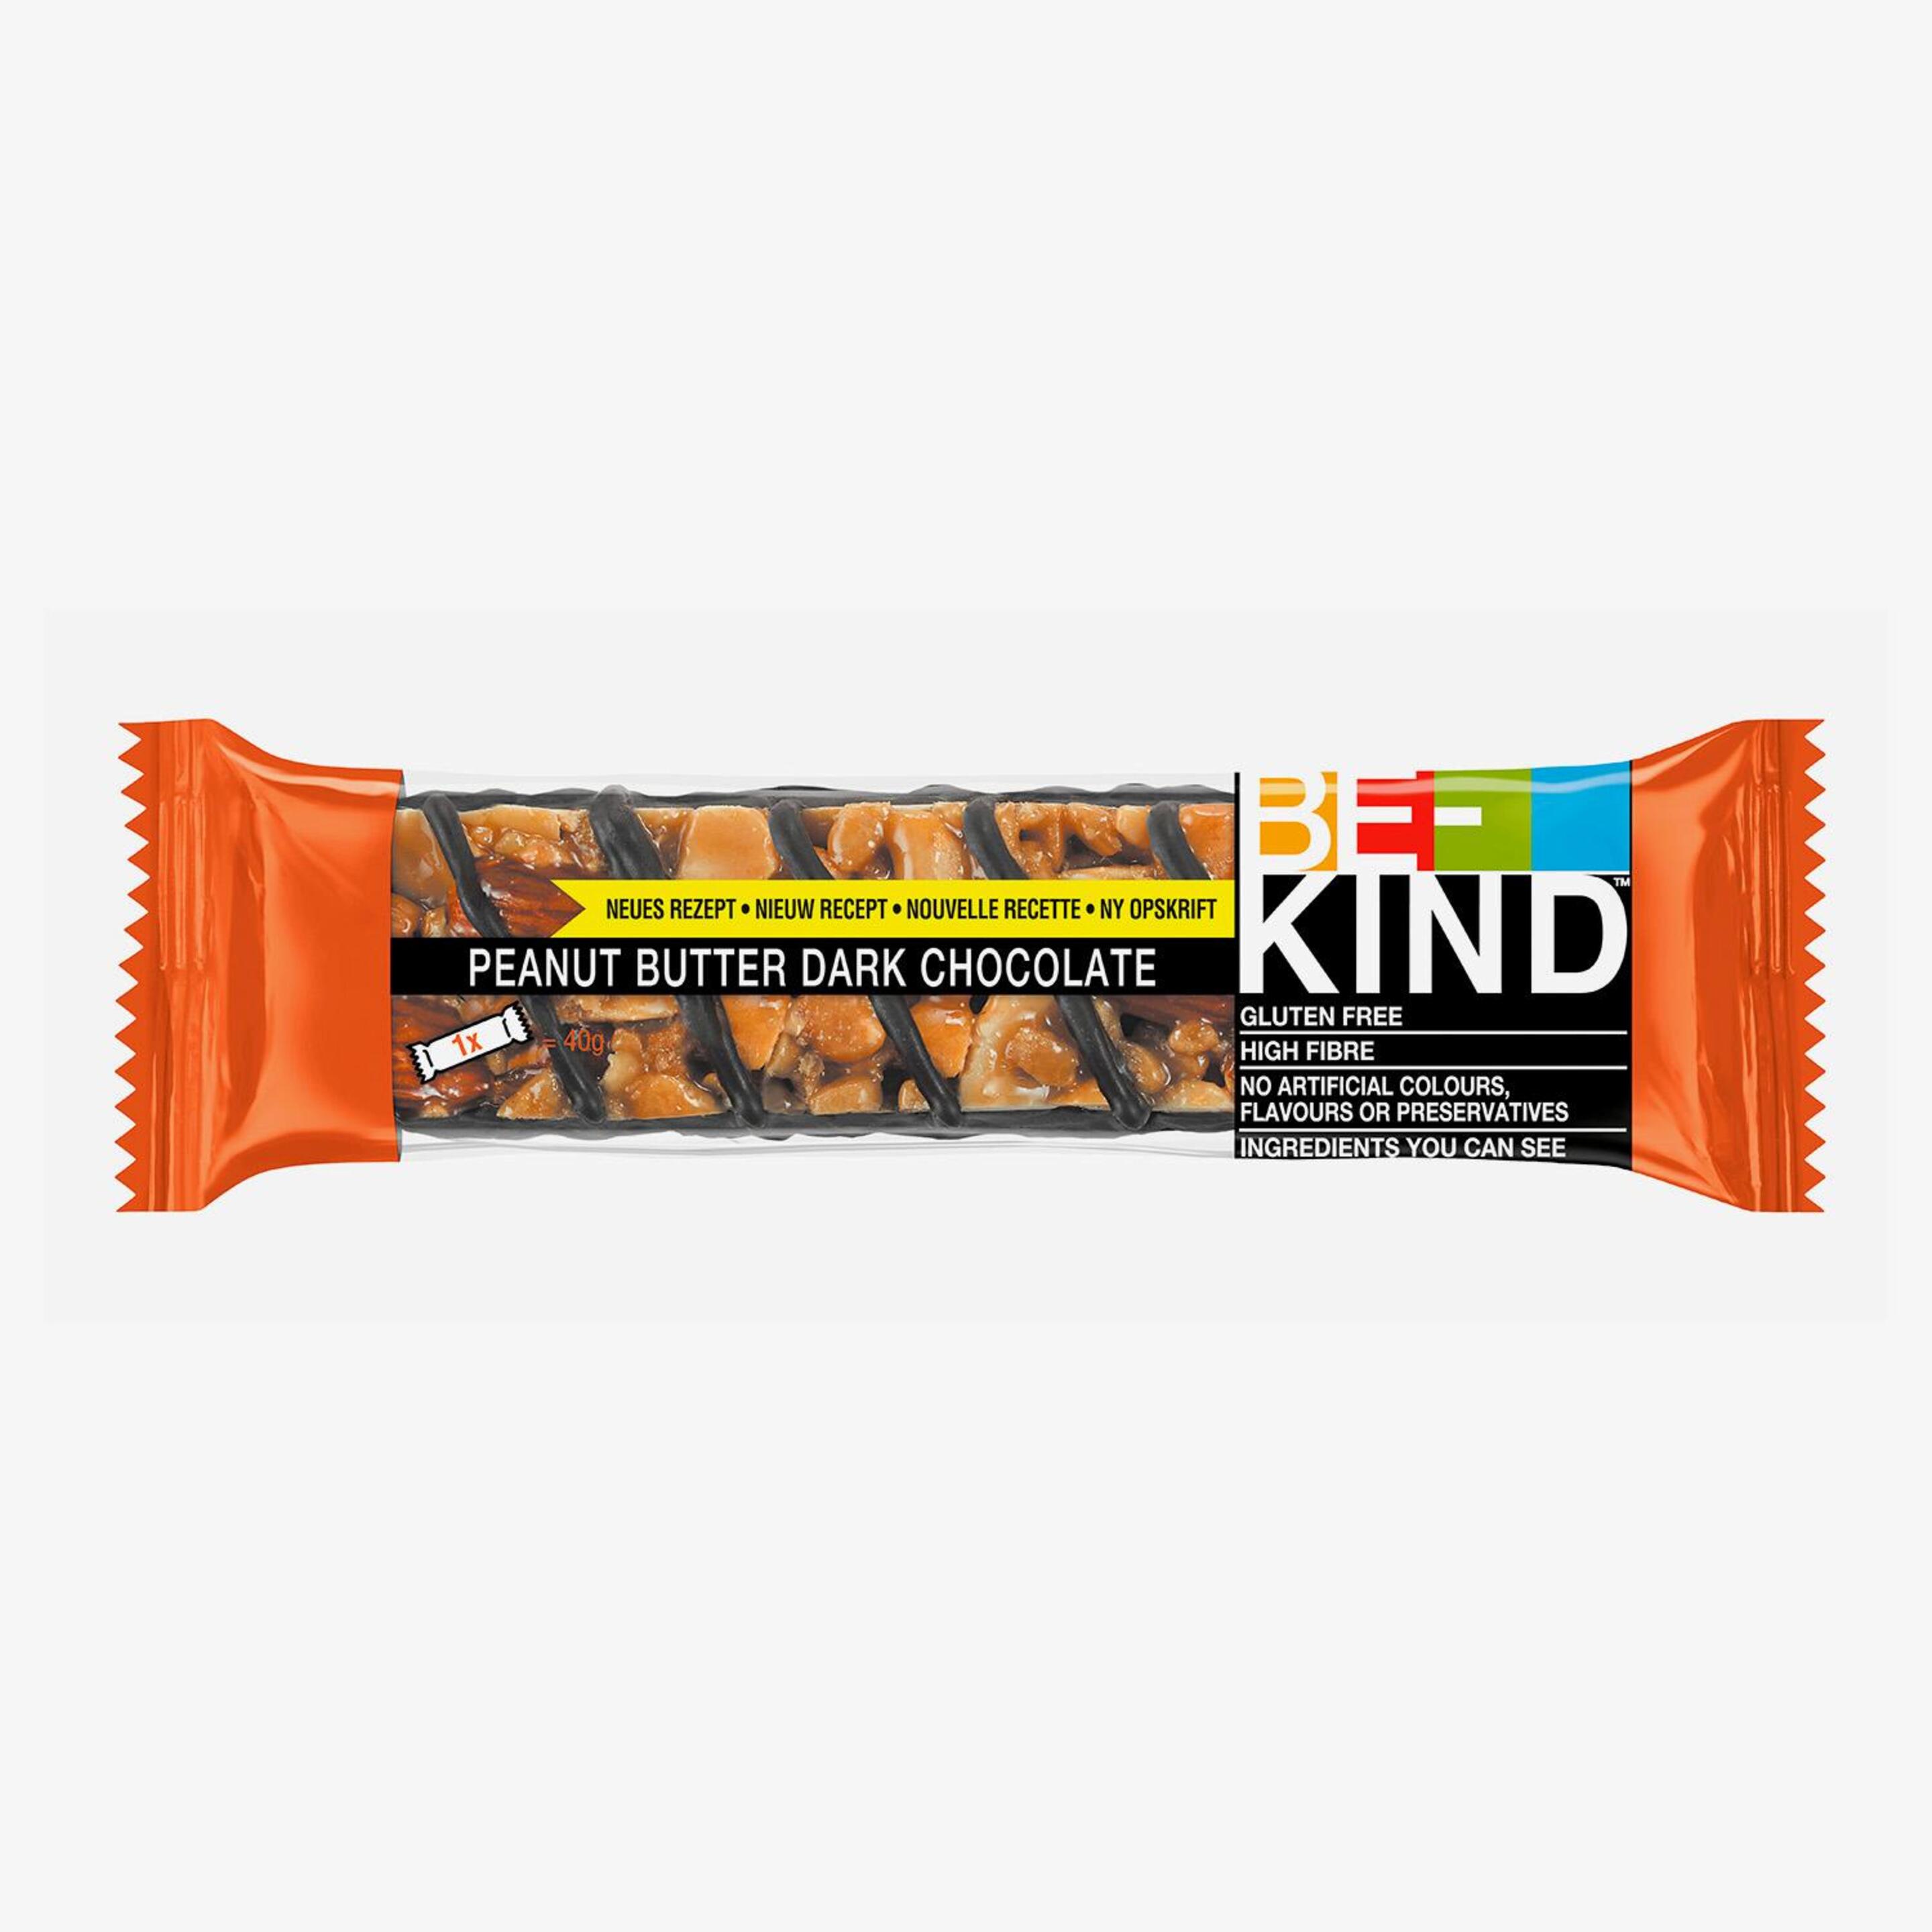 Be-kind Choco 40g